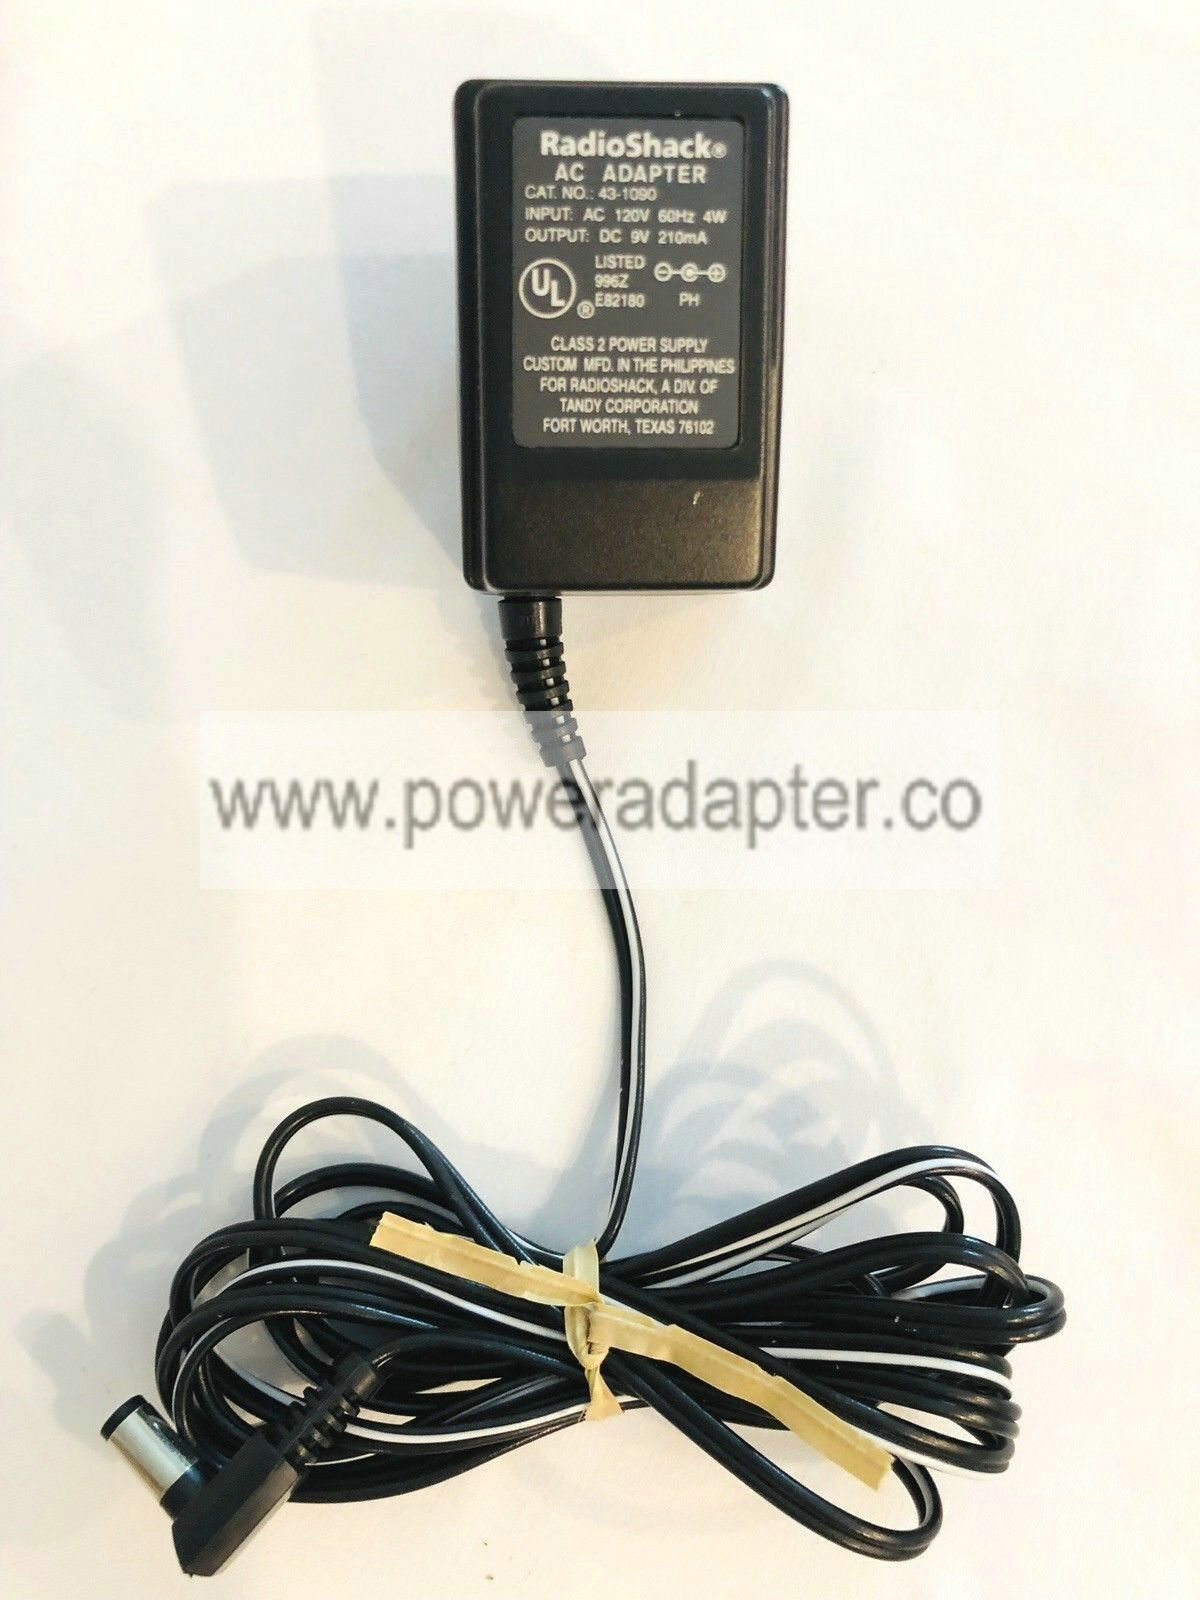 RadioShack 43-1090 AC DC Power Supply Adapter Charger Output 9V 210mA RadioShack Ac Adapter 43-1090 Class 2 Power Sup